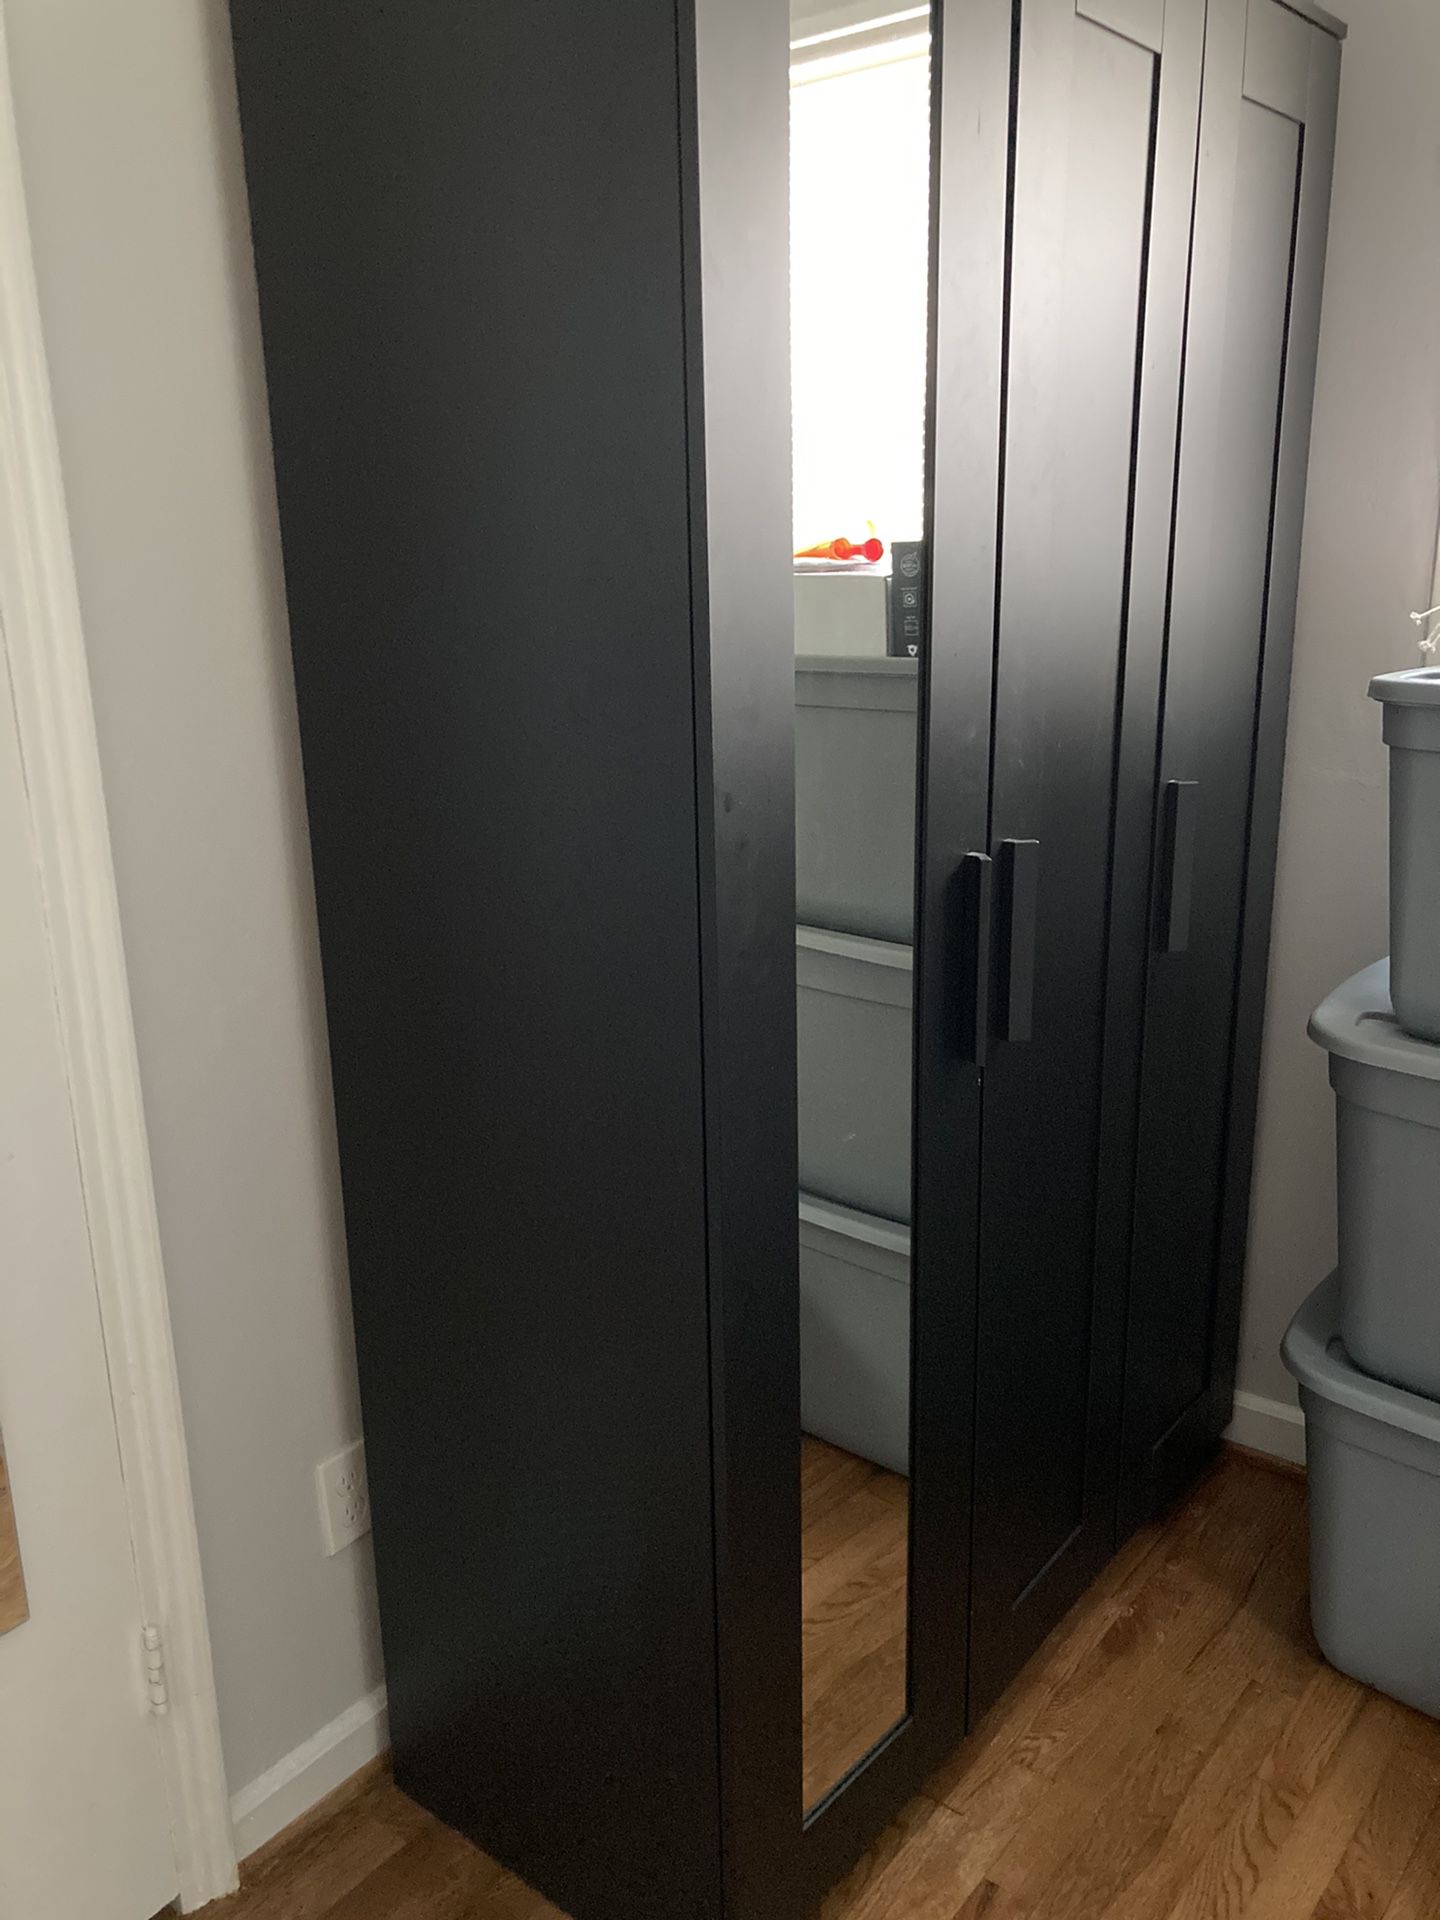 IKEA storage closet armoire black mirror shelves hanging